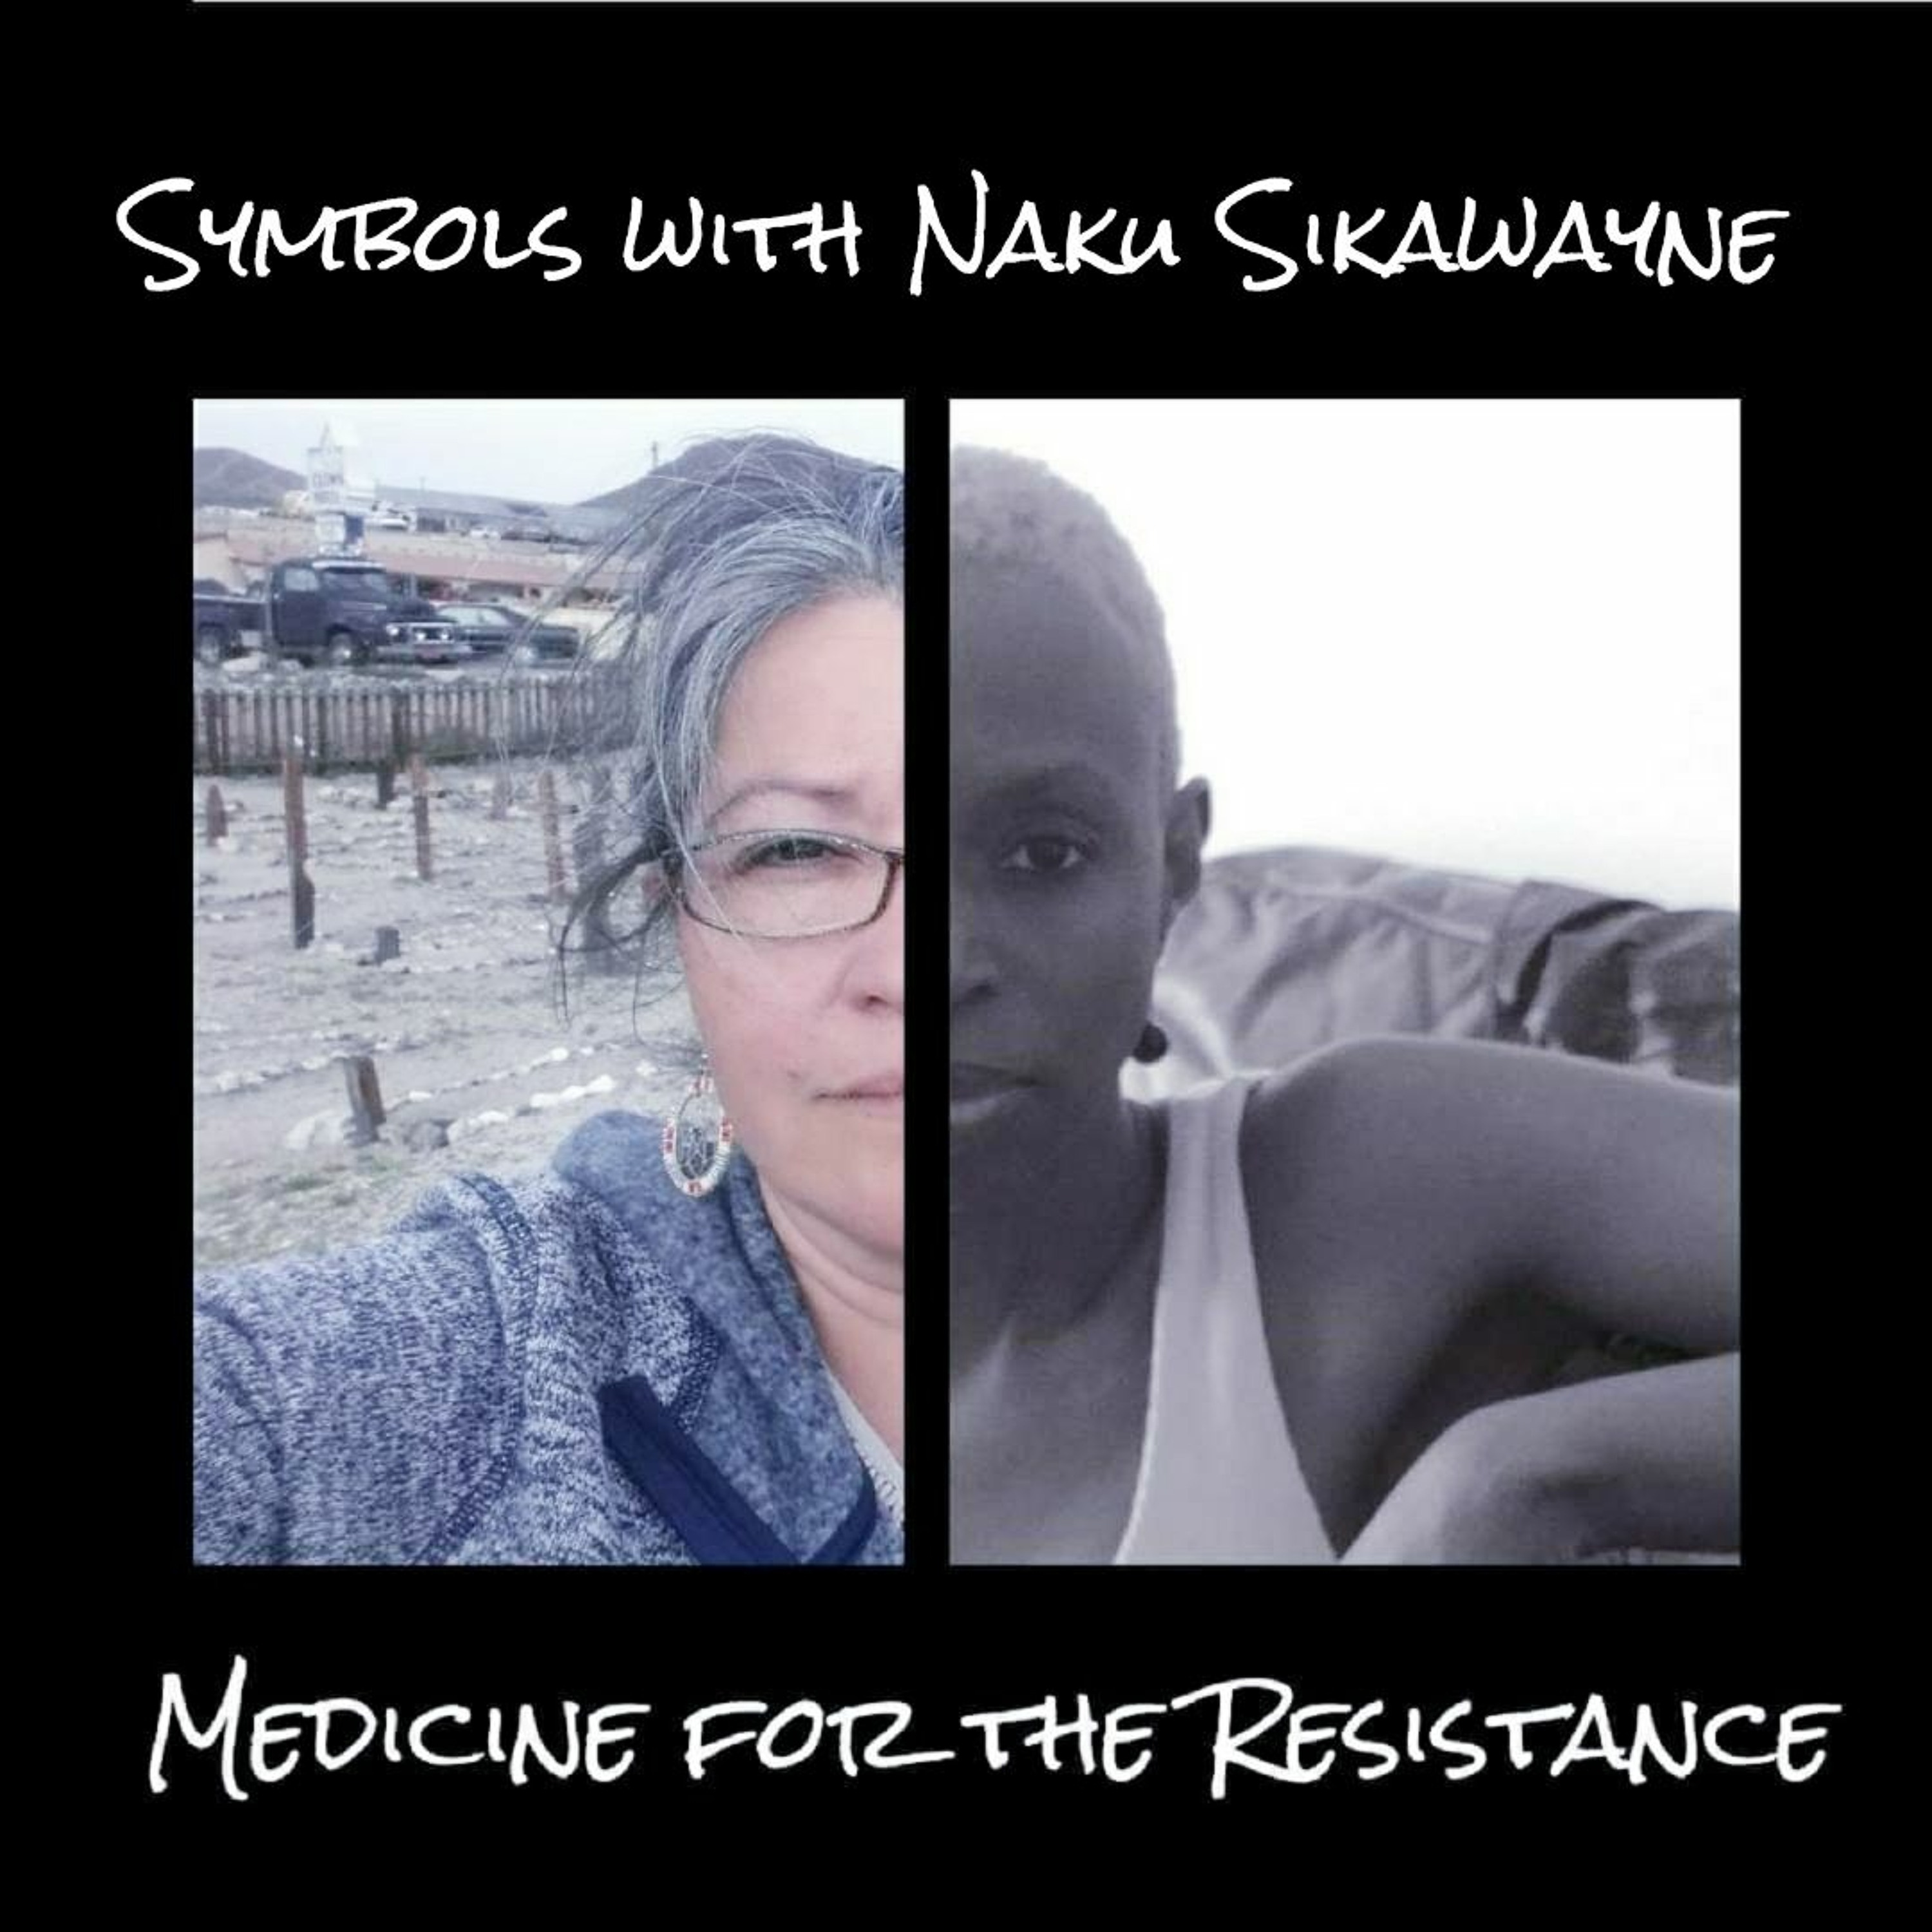 Medicine for the Resistance - Symbols with Naku Sikawayne